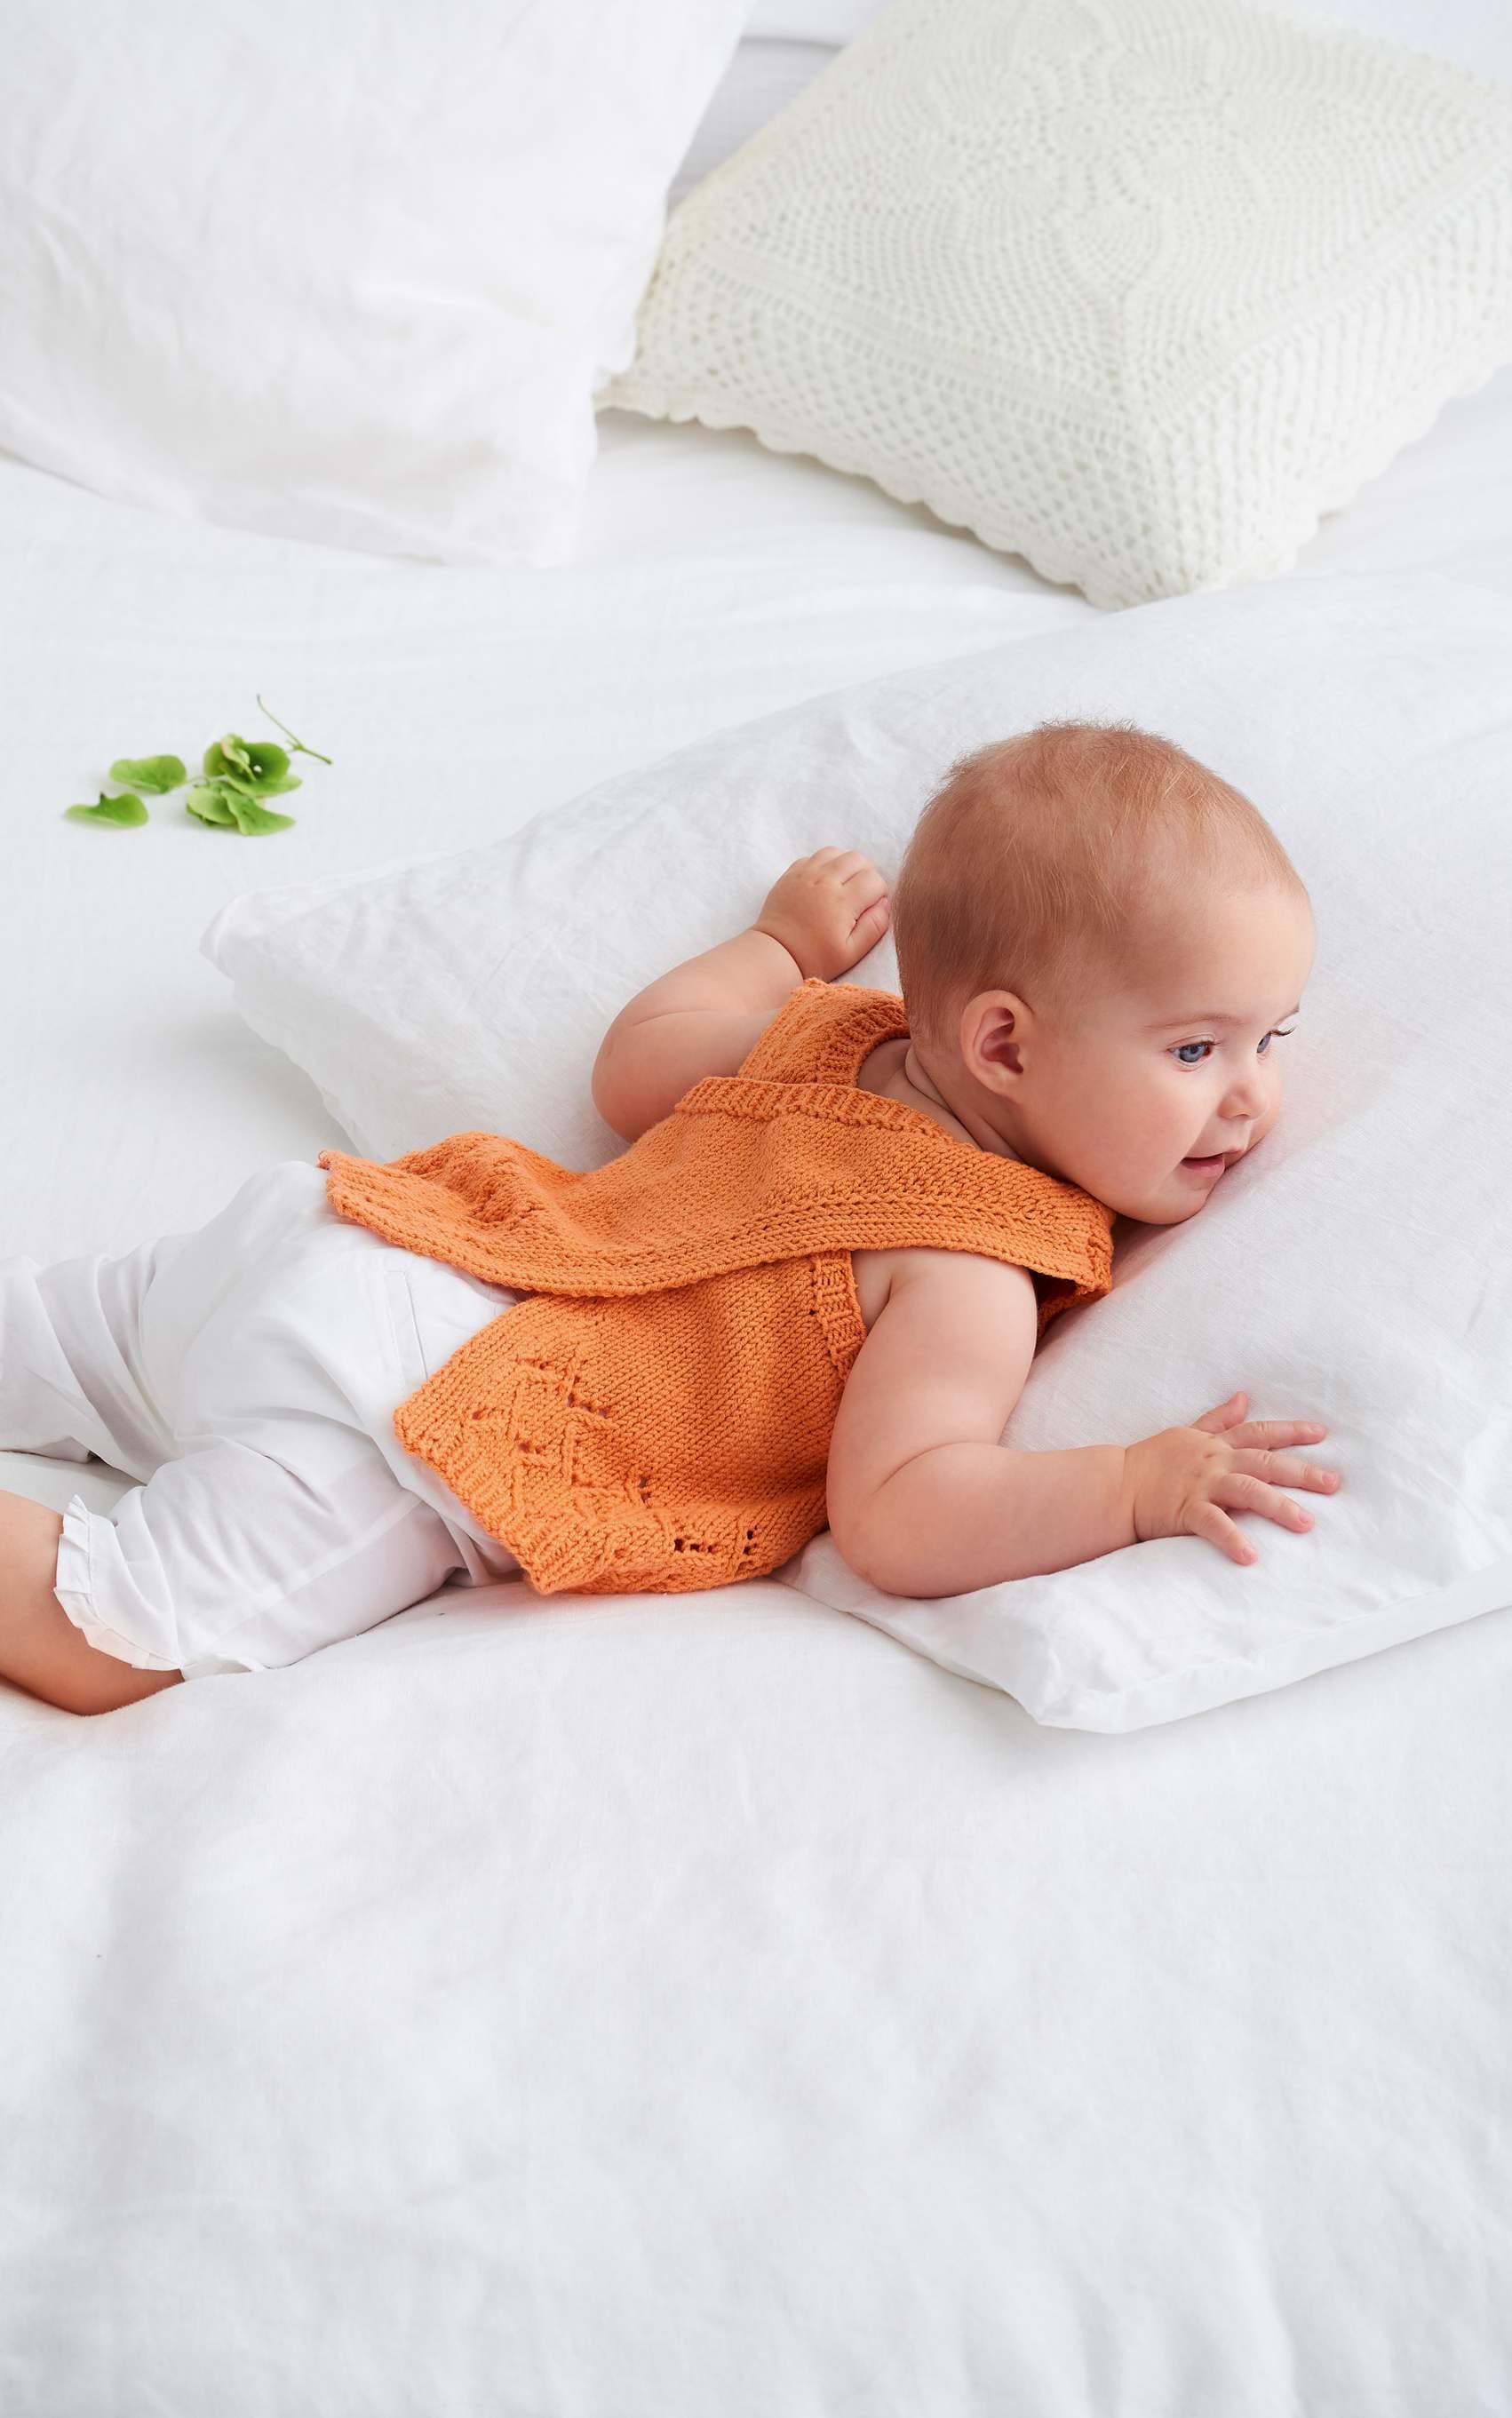 LANA GROSSA Strickset Baby Top mit verkreuztem Rückenteil - Strickset